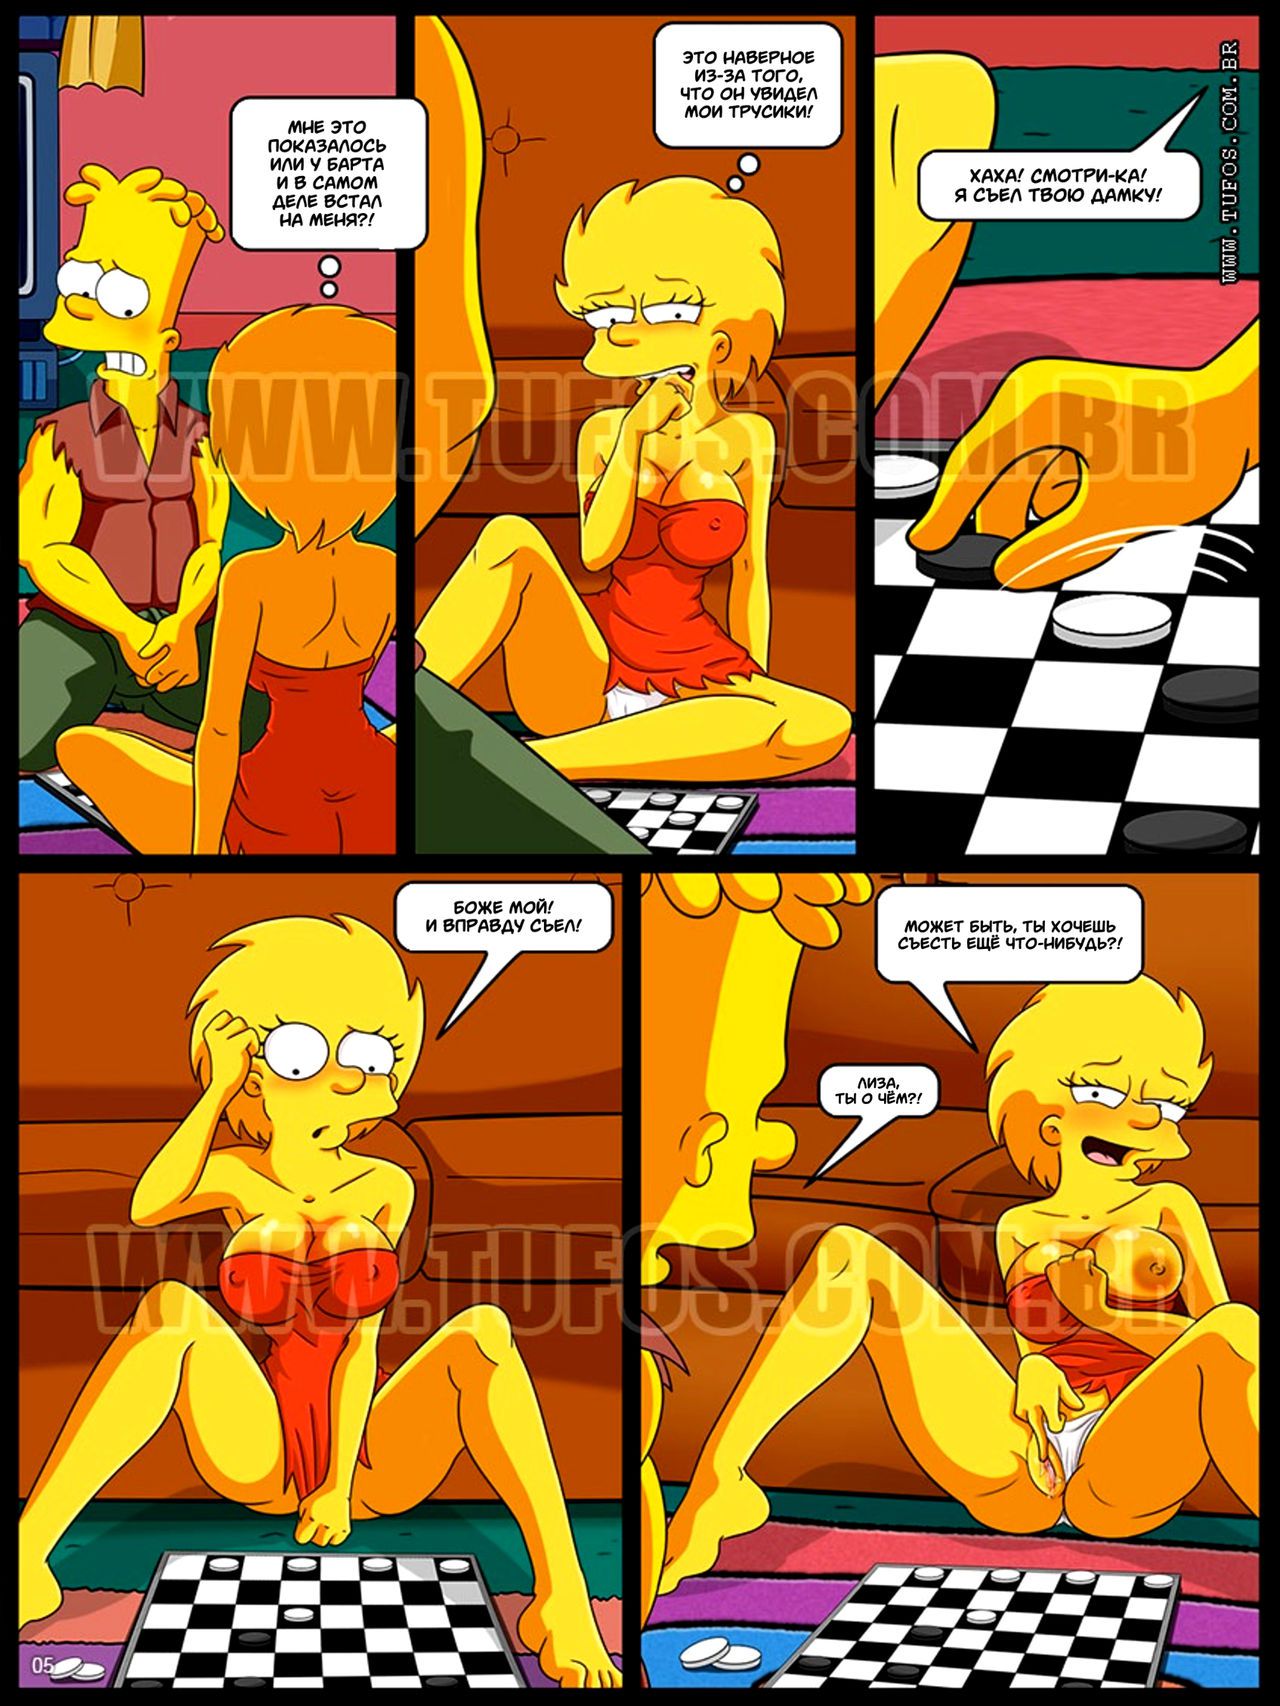 [Tufos (Croc)] The Simpsons #3: The Checkers Game | Симпсоны #3: Игра в шашки [Russian] {Shadow} Os Simptoons #3: Jogando damas 5